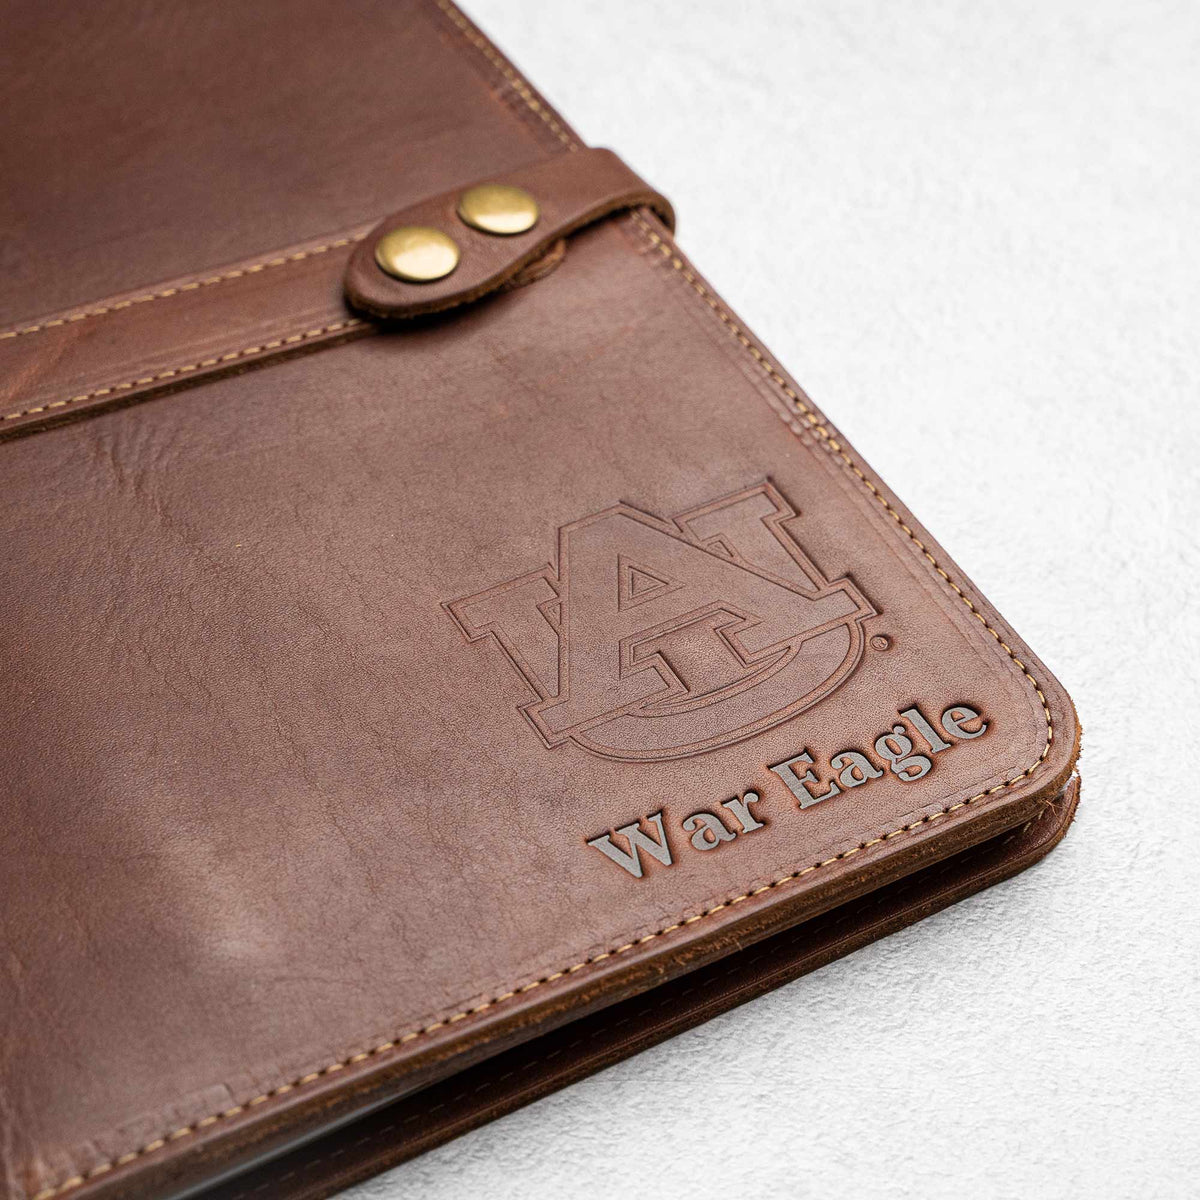 The Officially Licensed Auburn Vanderbilt 2.0 Fine Leather Portfolio Padfolio